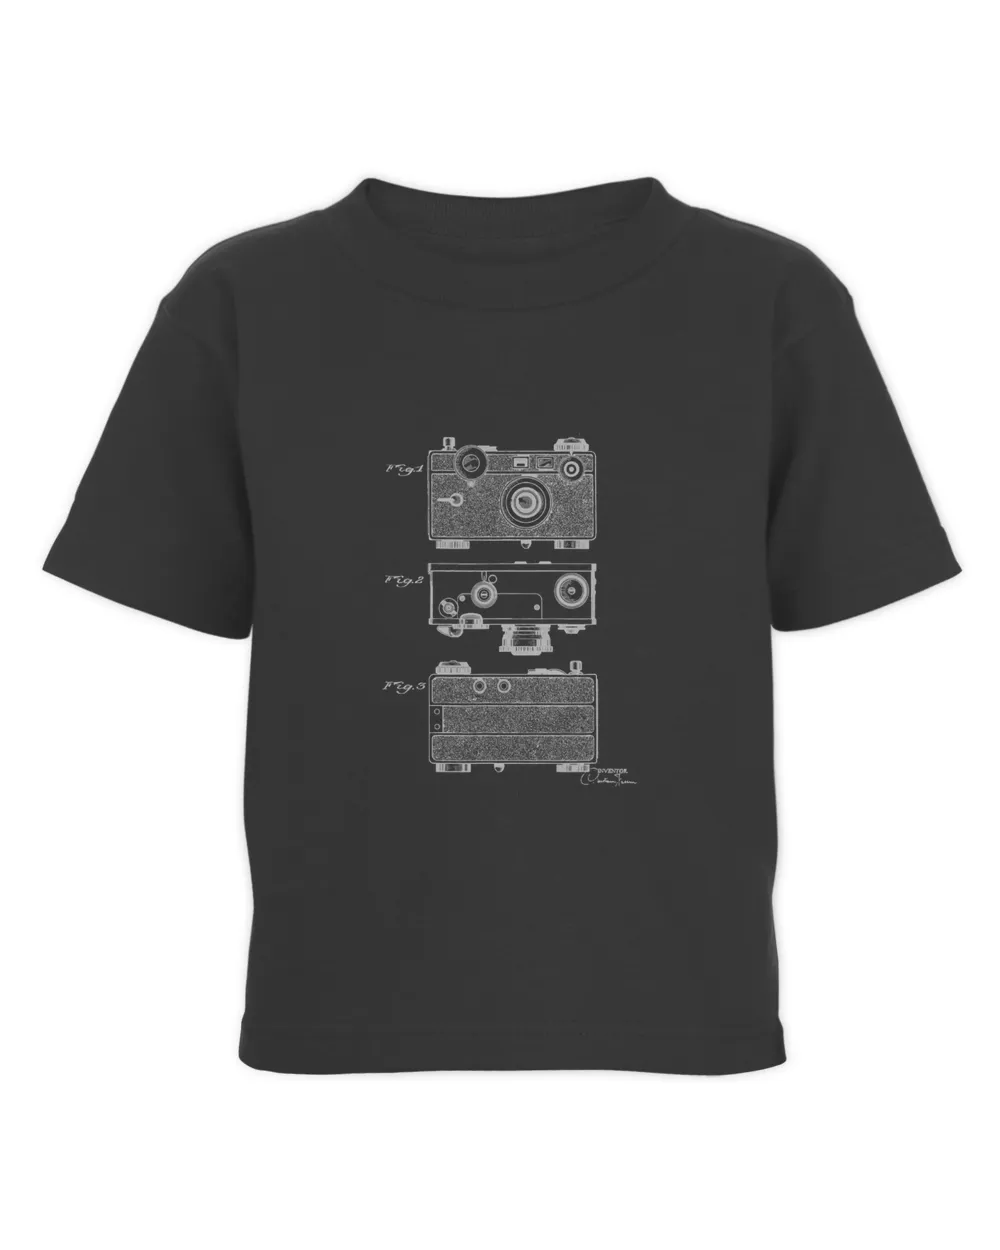 Vintage Argus Camera Diagram T-Shirt Mechanical Graphic